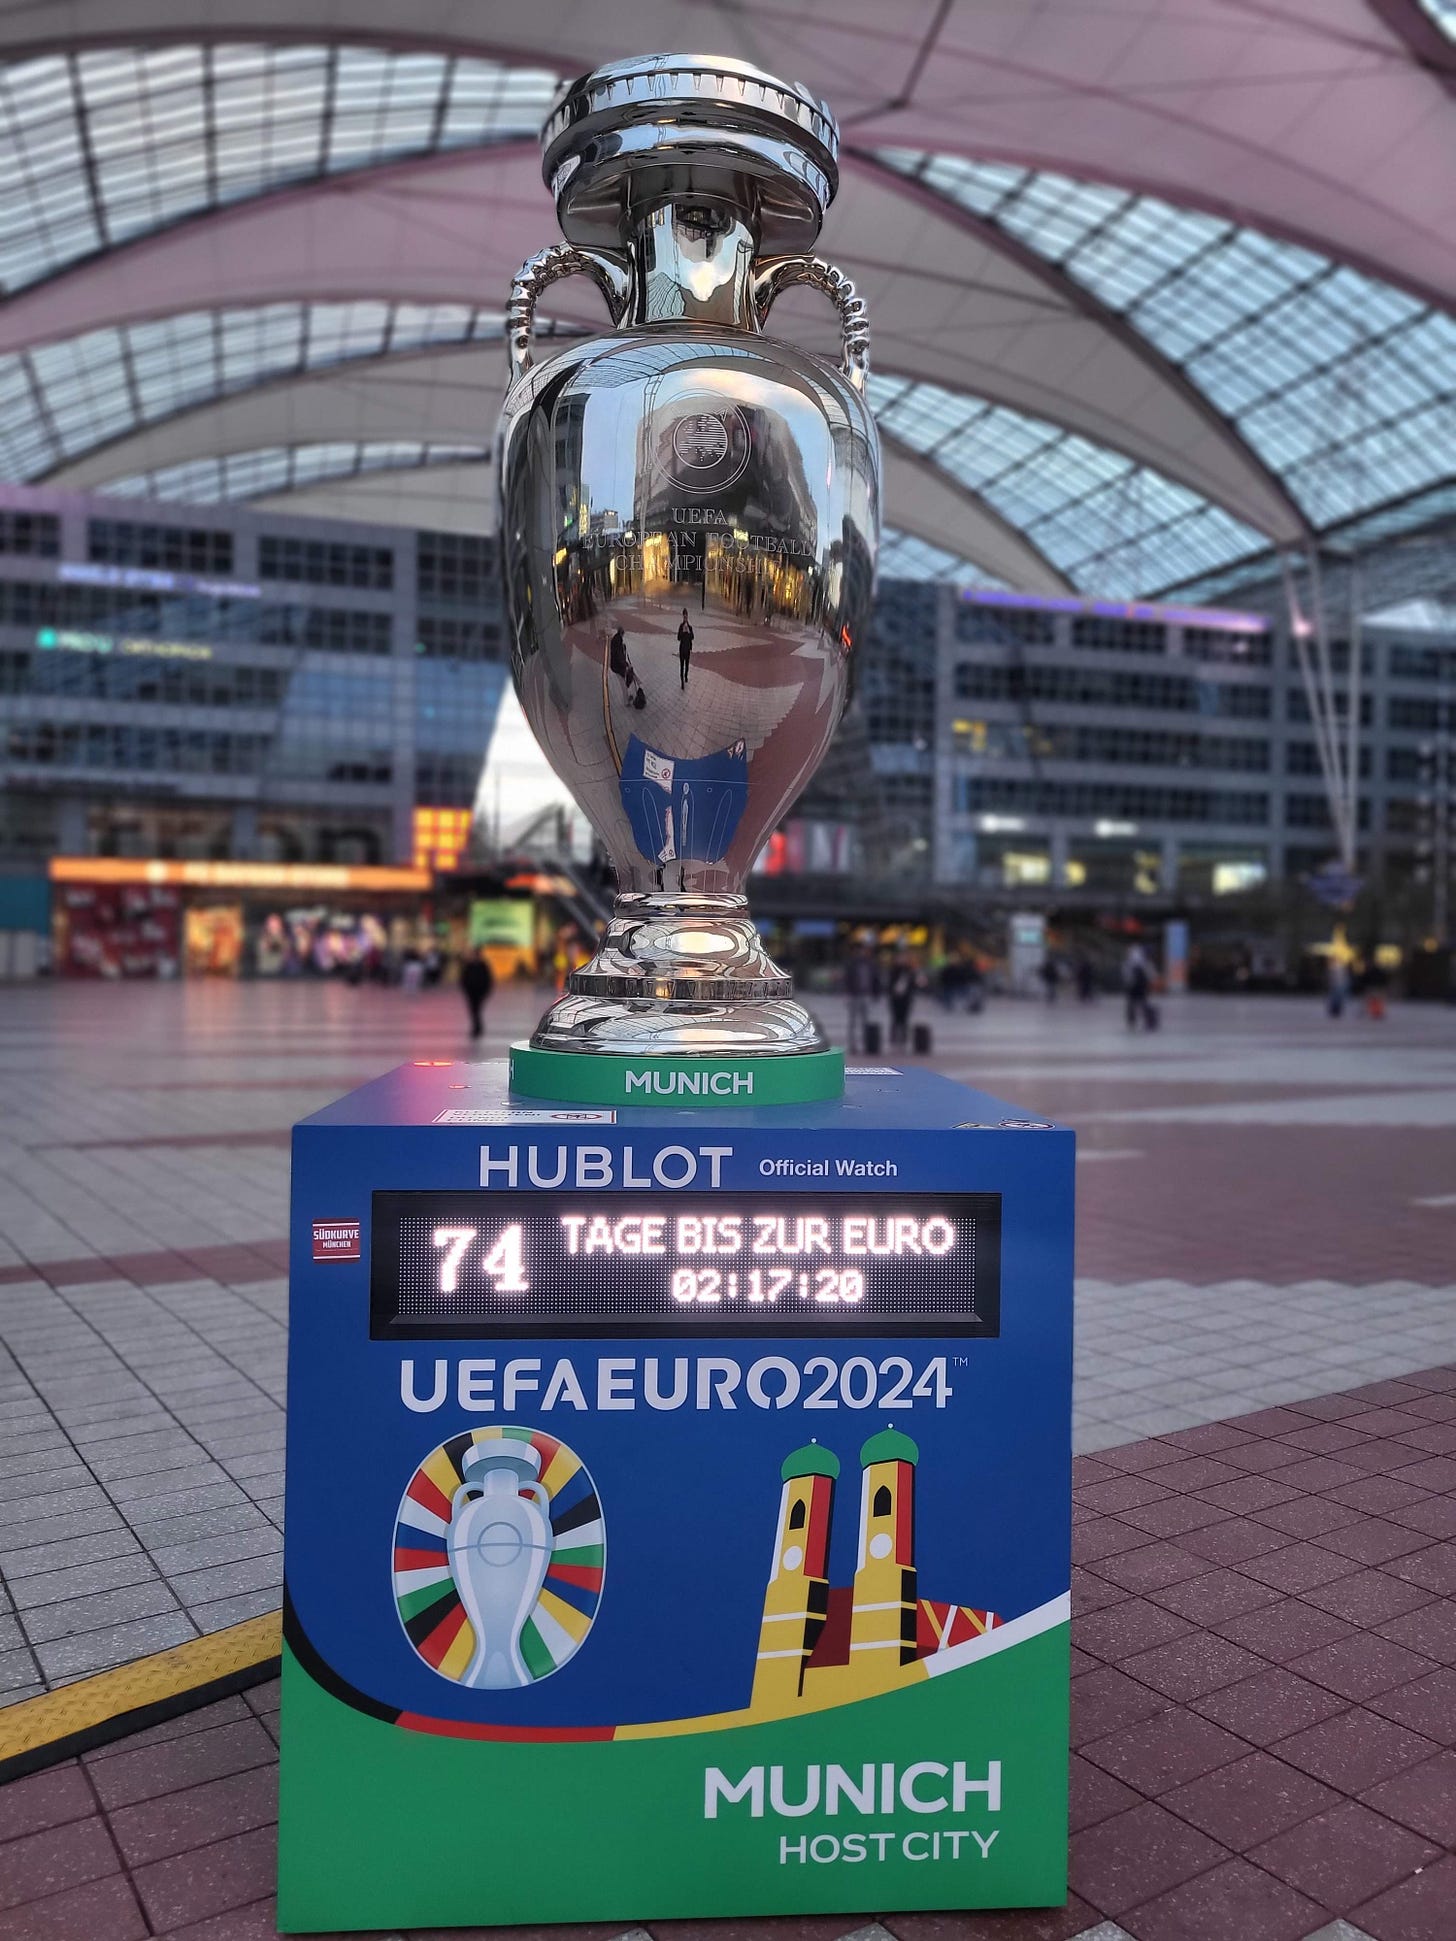 File:Noch 74 Tage bis zur UEFA EURO 2024, Munich.jpg - Wikimedia Commons